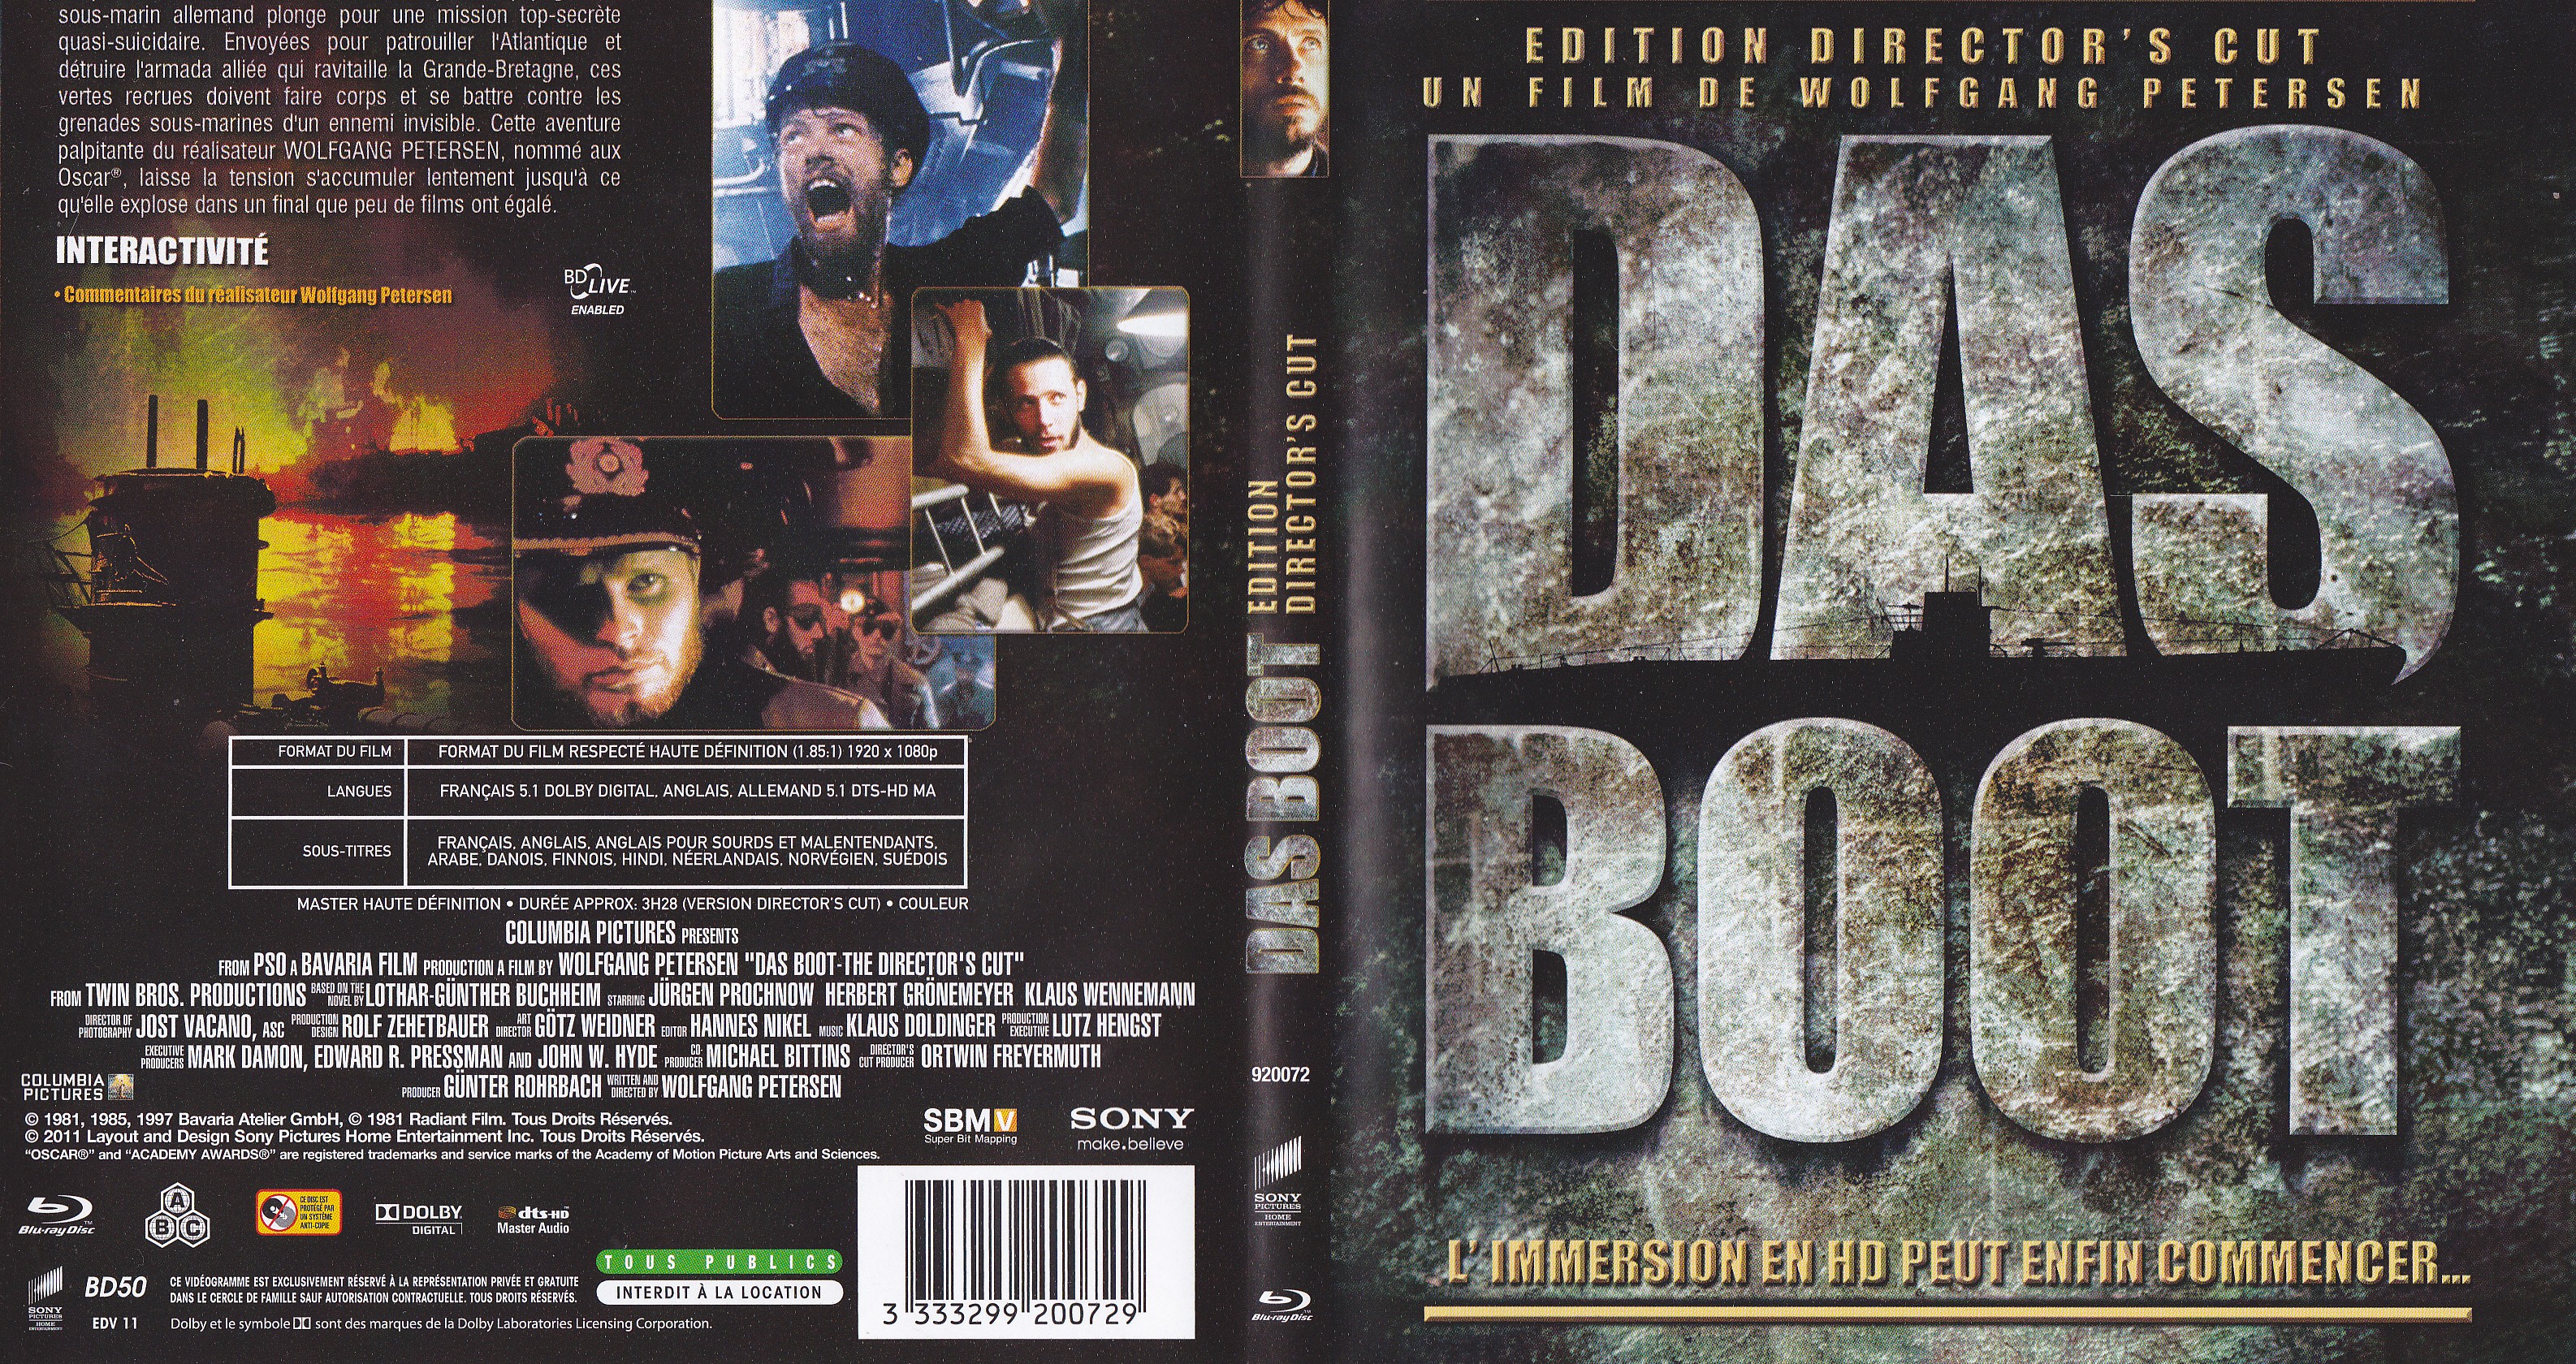 Jaquette DVD Das boot (BLU-RAY) v2